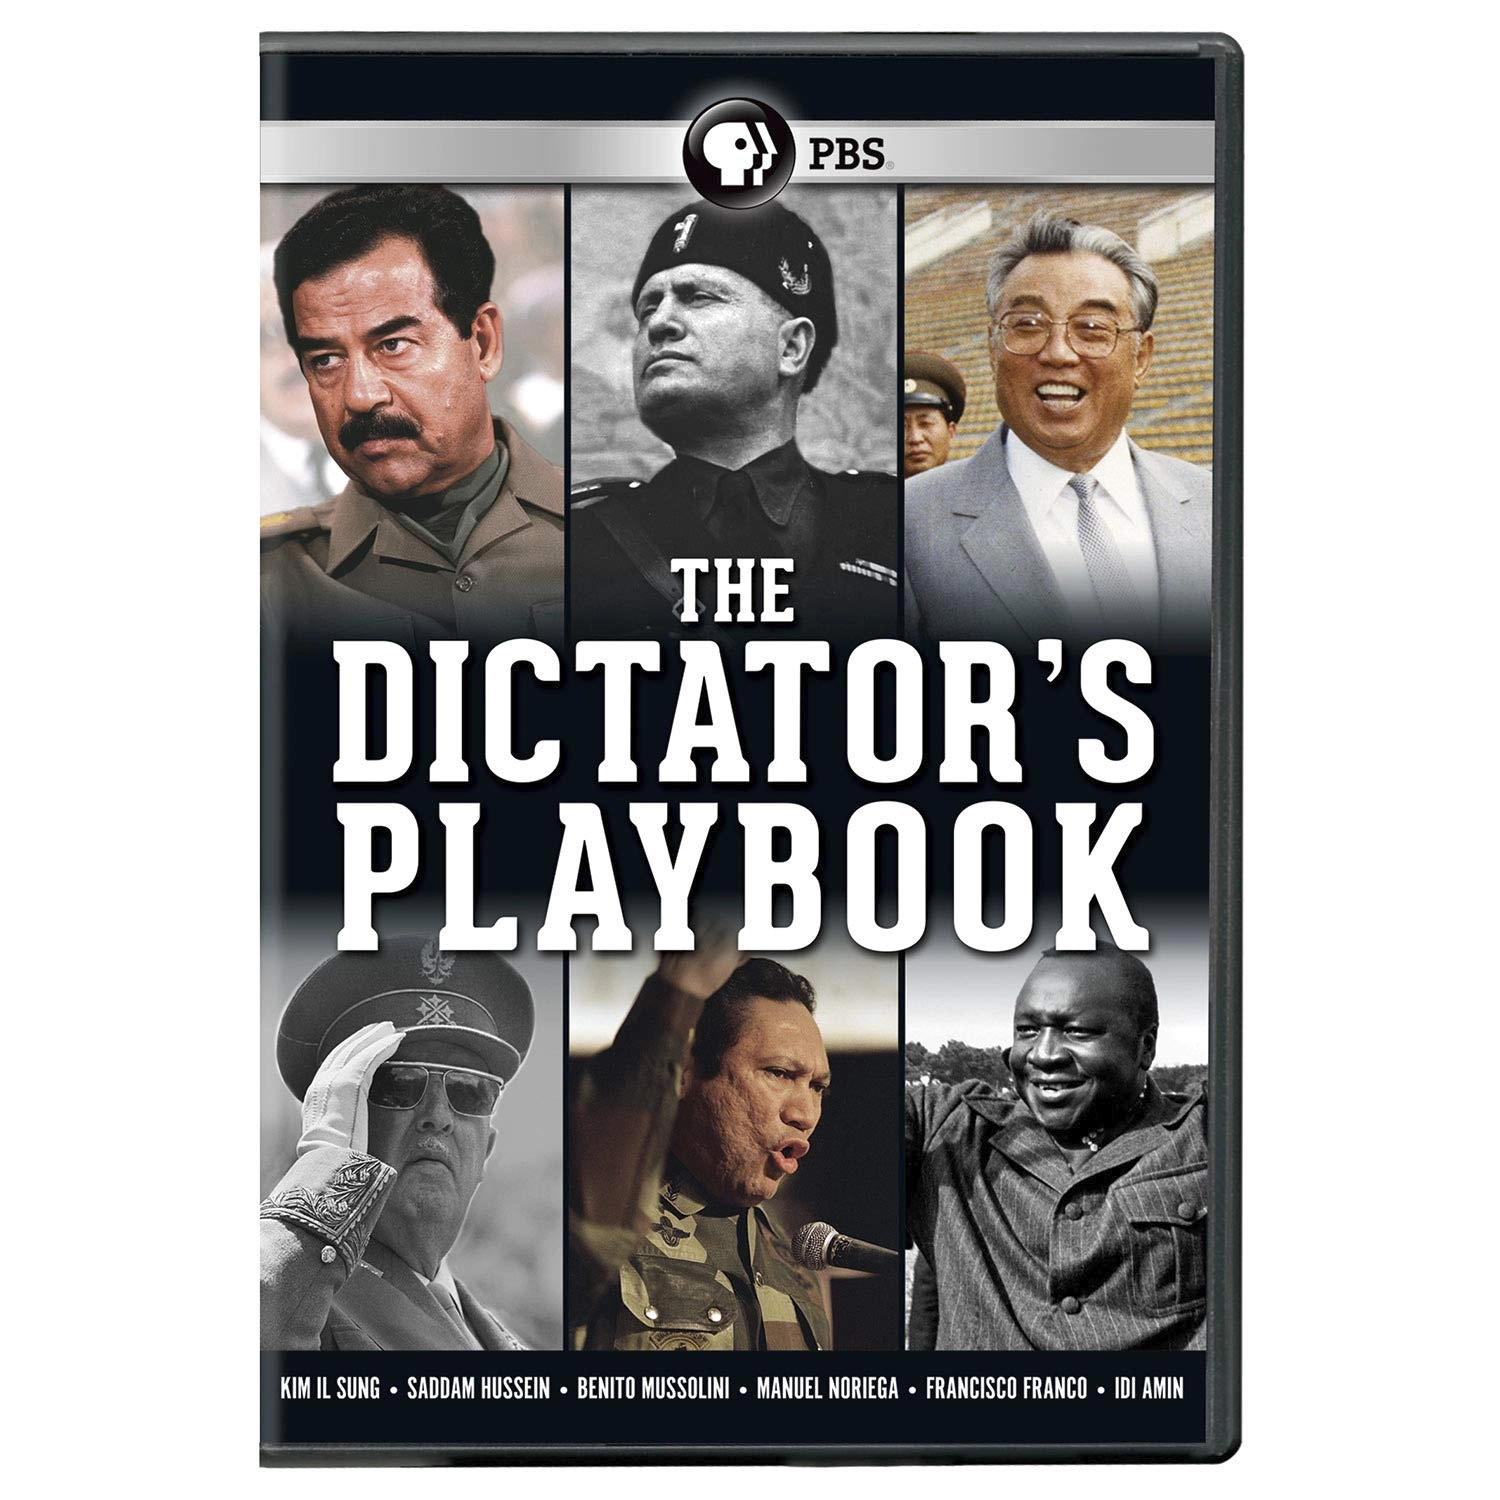 The Dictators Playbook TV Mini Series